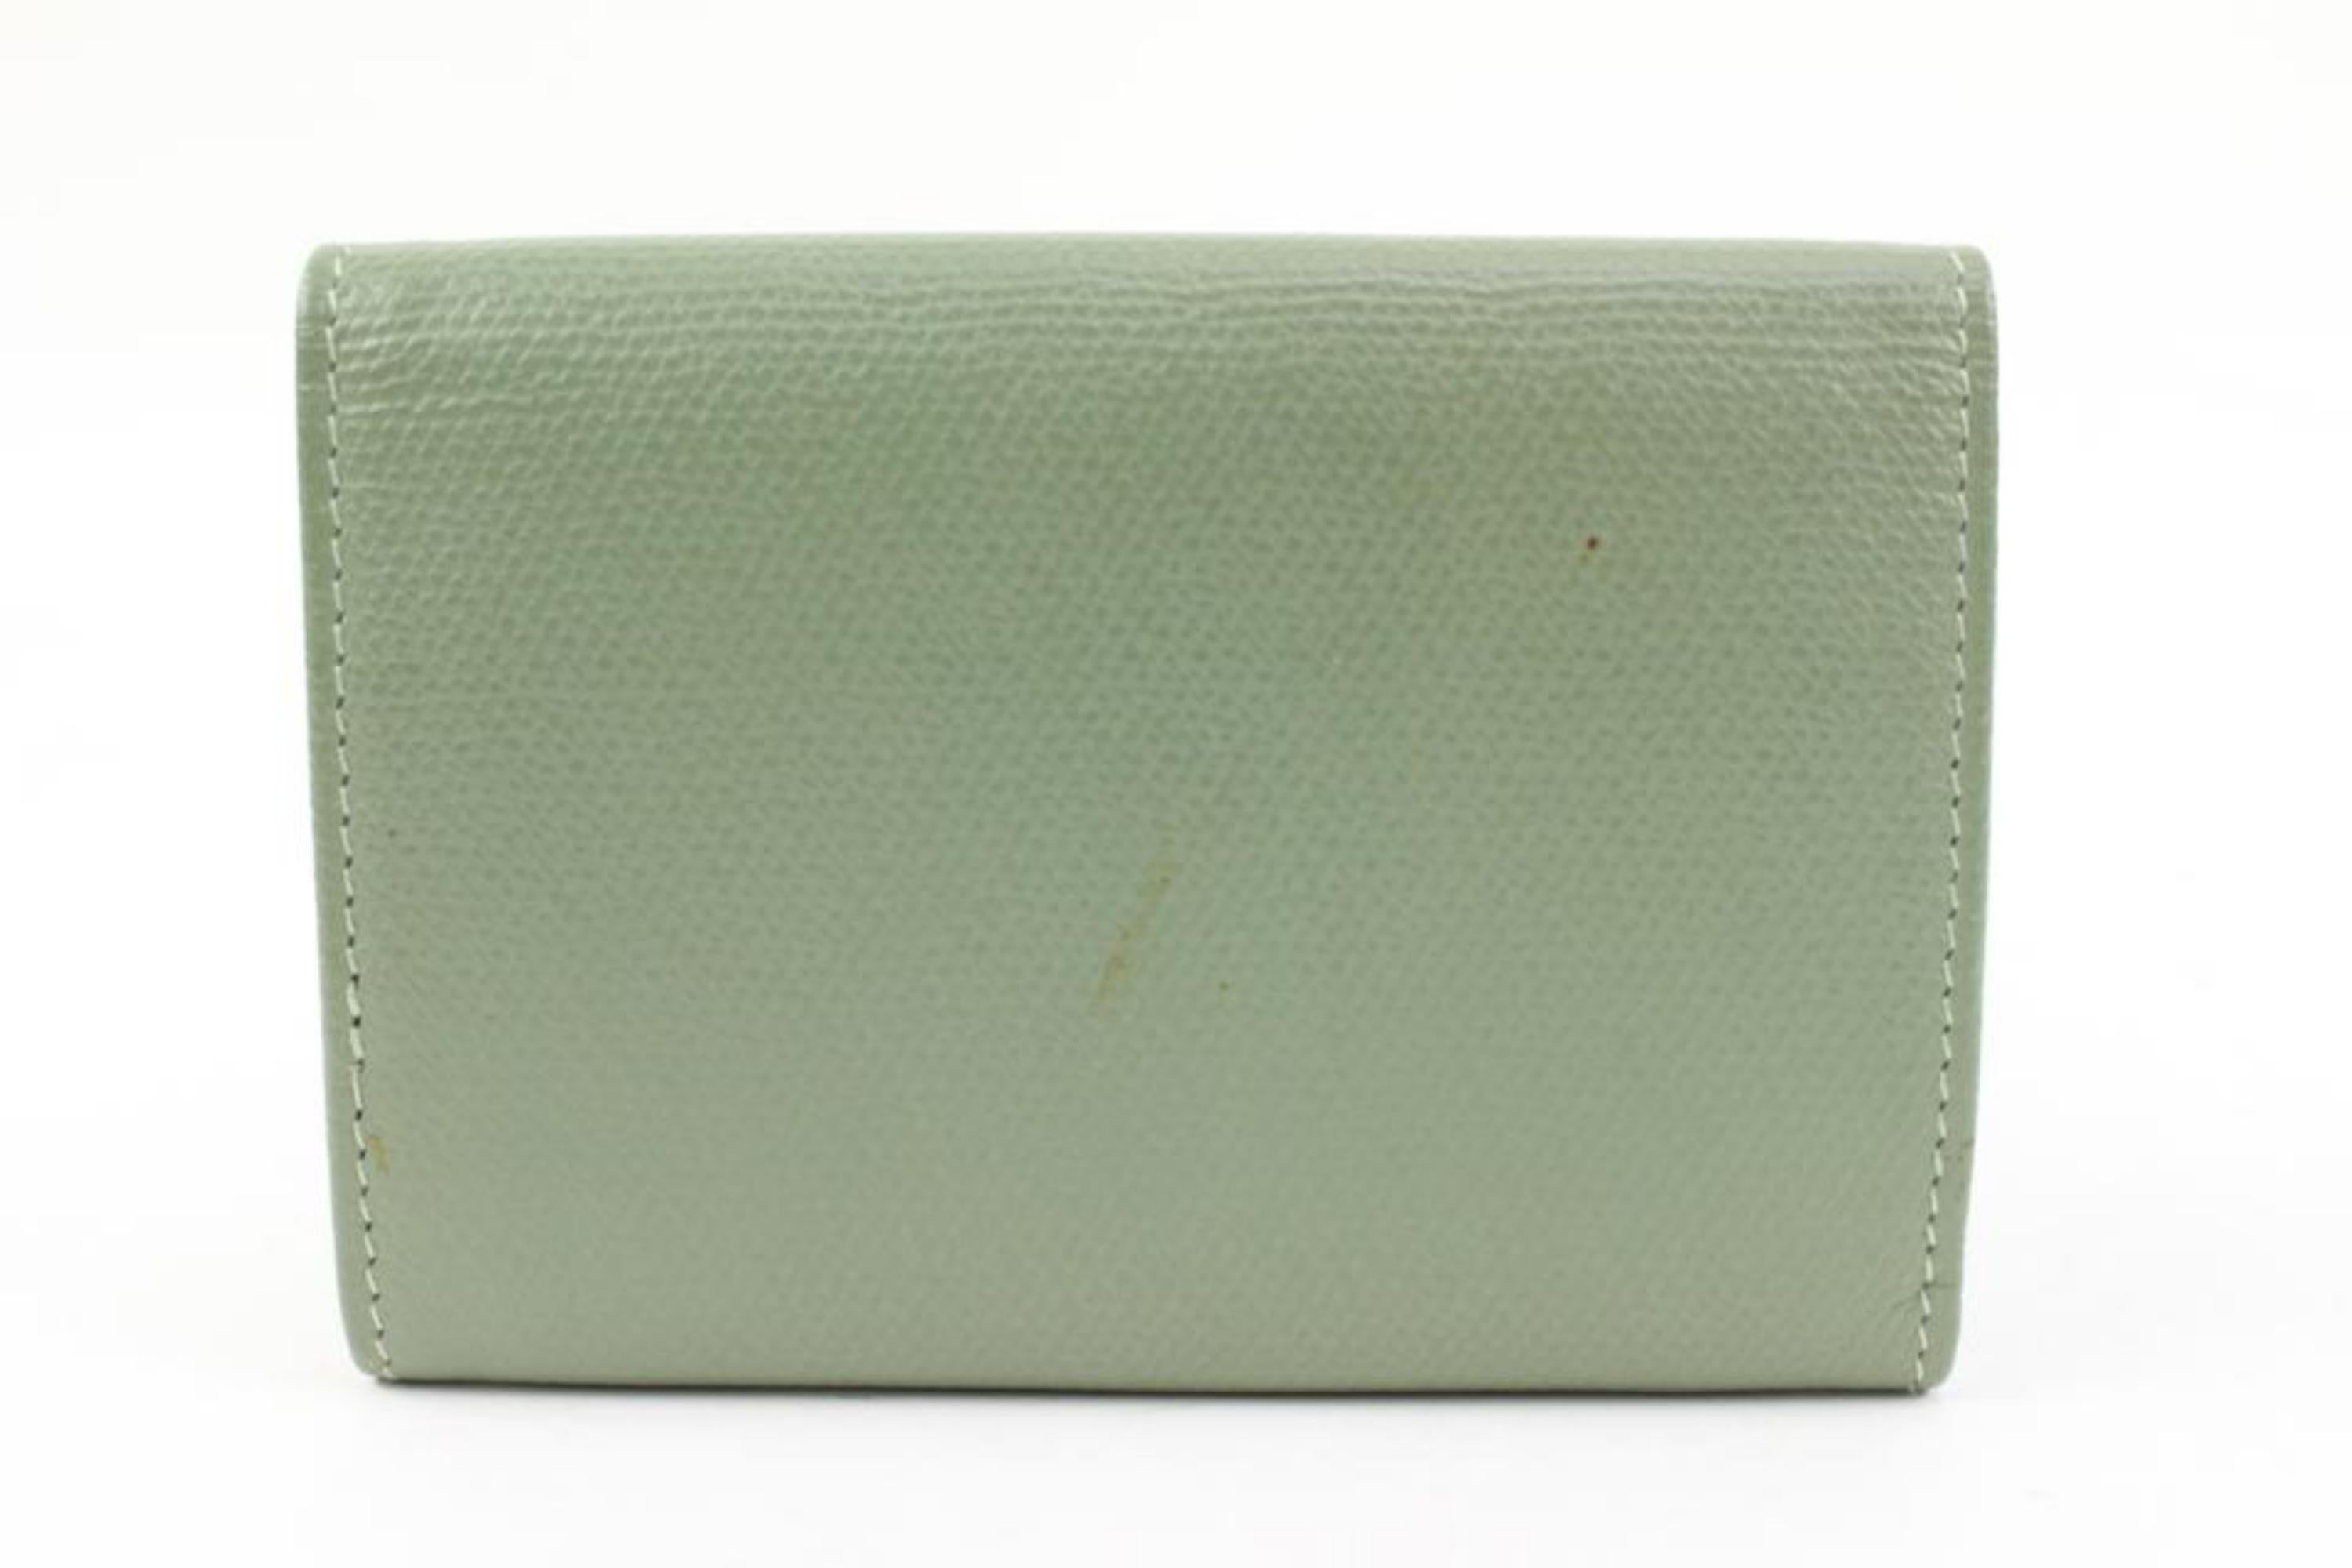 Gray Chanel Sage Green Calfskin Button Line Card Holder Wallet Case 93ck228s